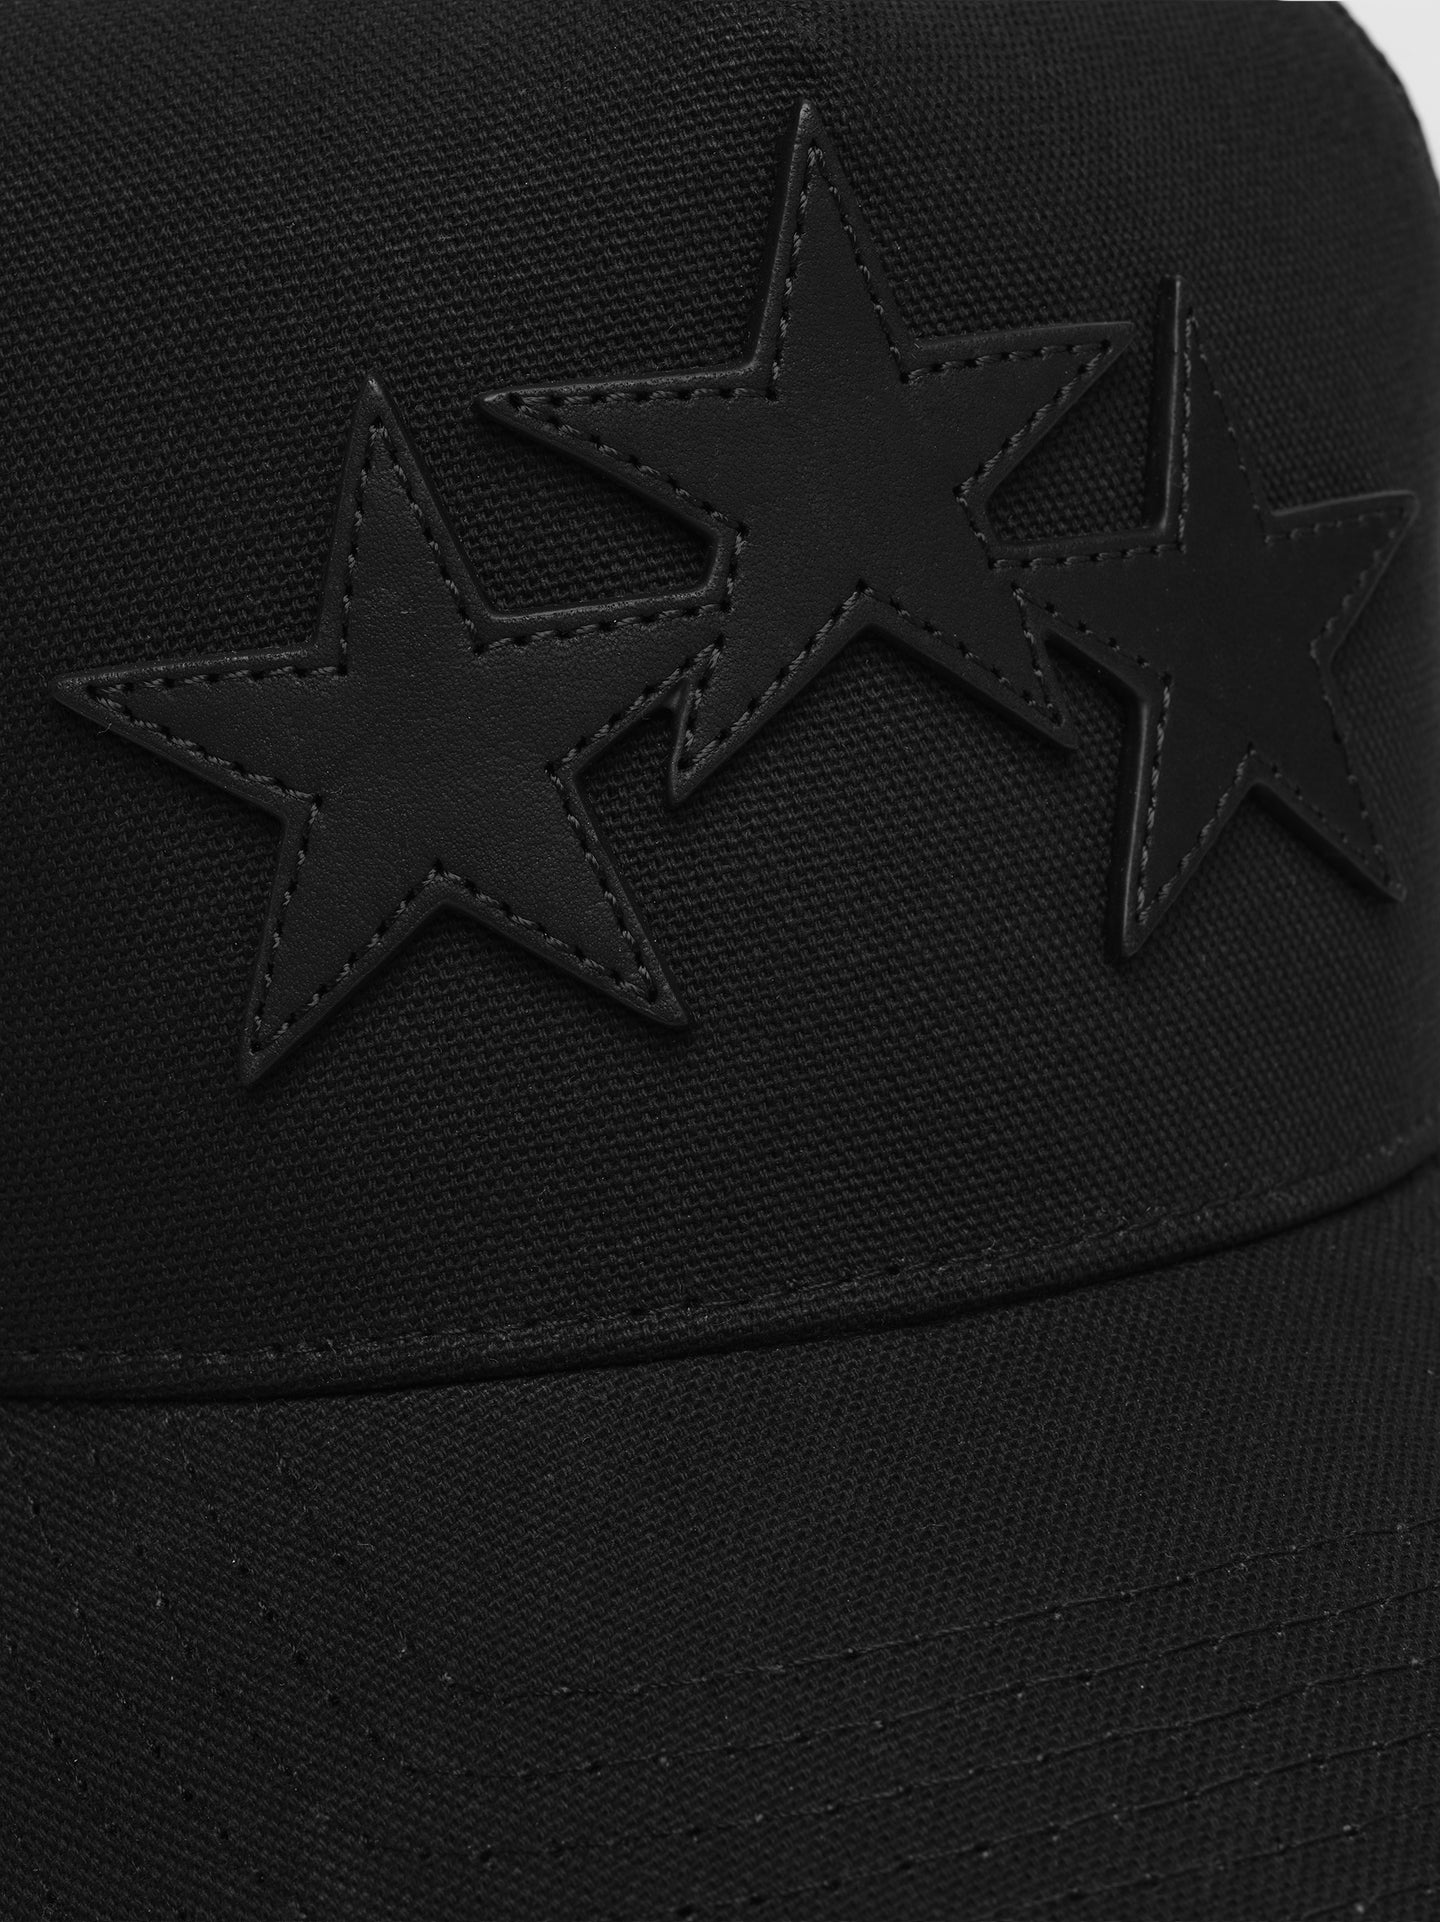 3 STAR TRUCKER HAT - BLACK BLACK